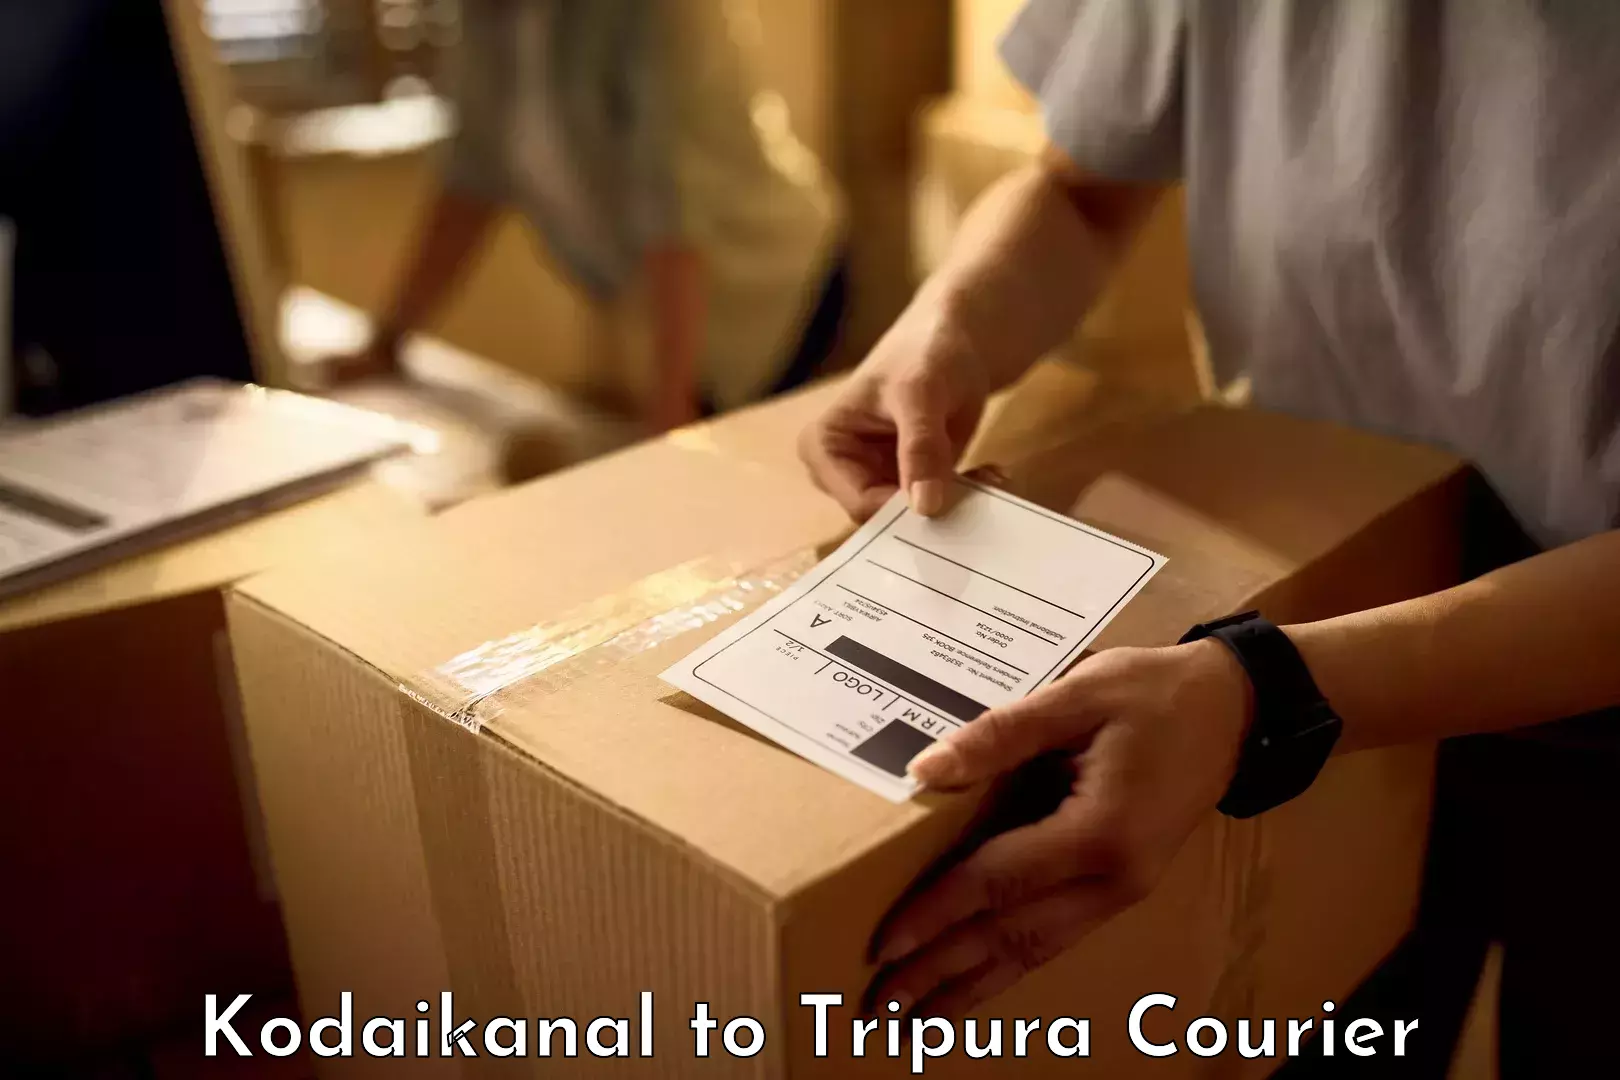 Luggage delivery network Kodaikanal to Udaipur Tripura